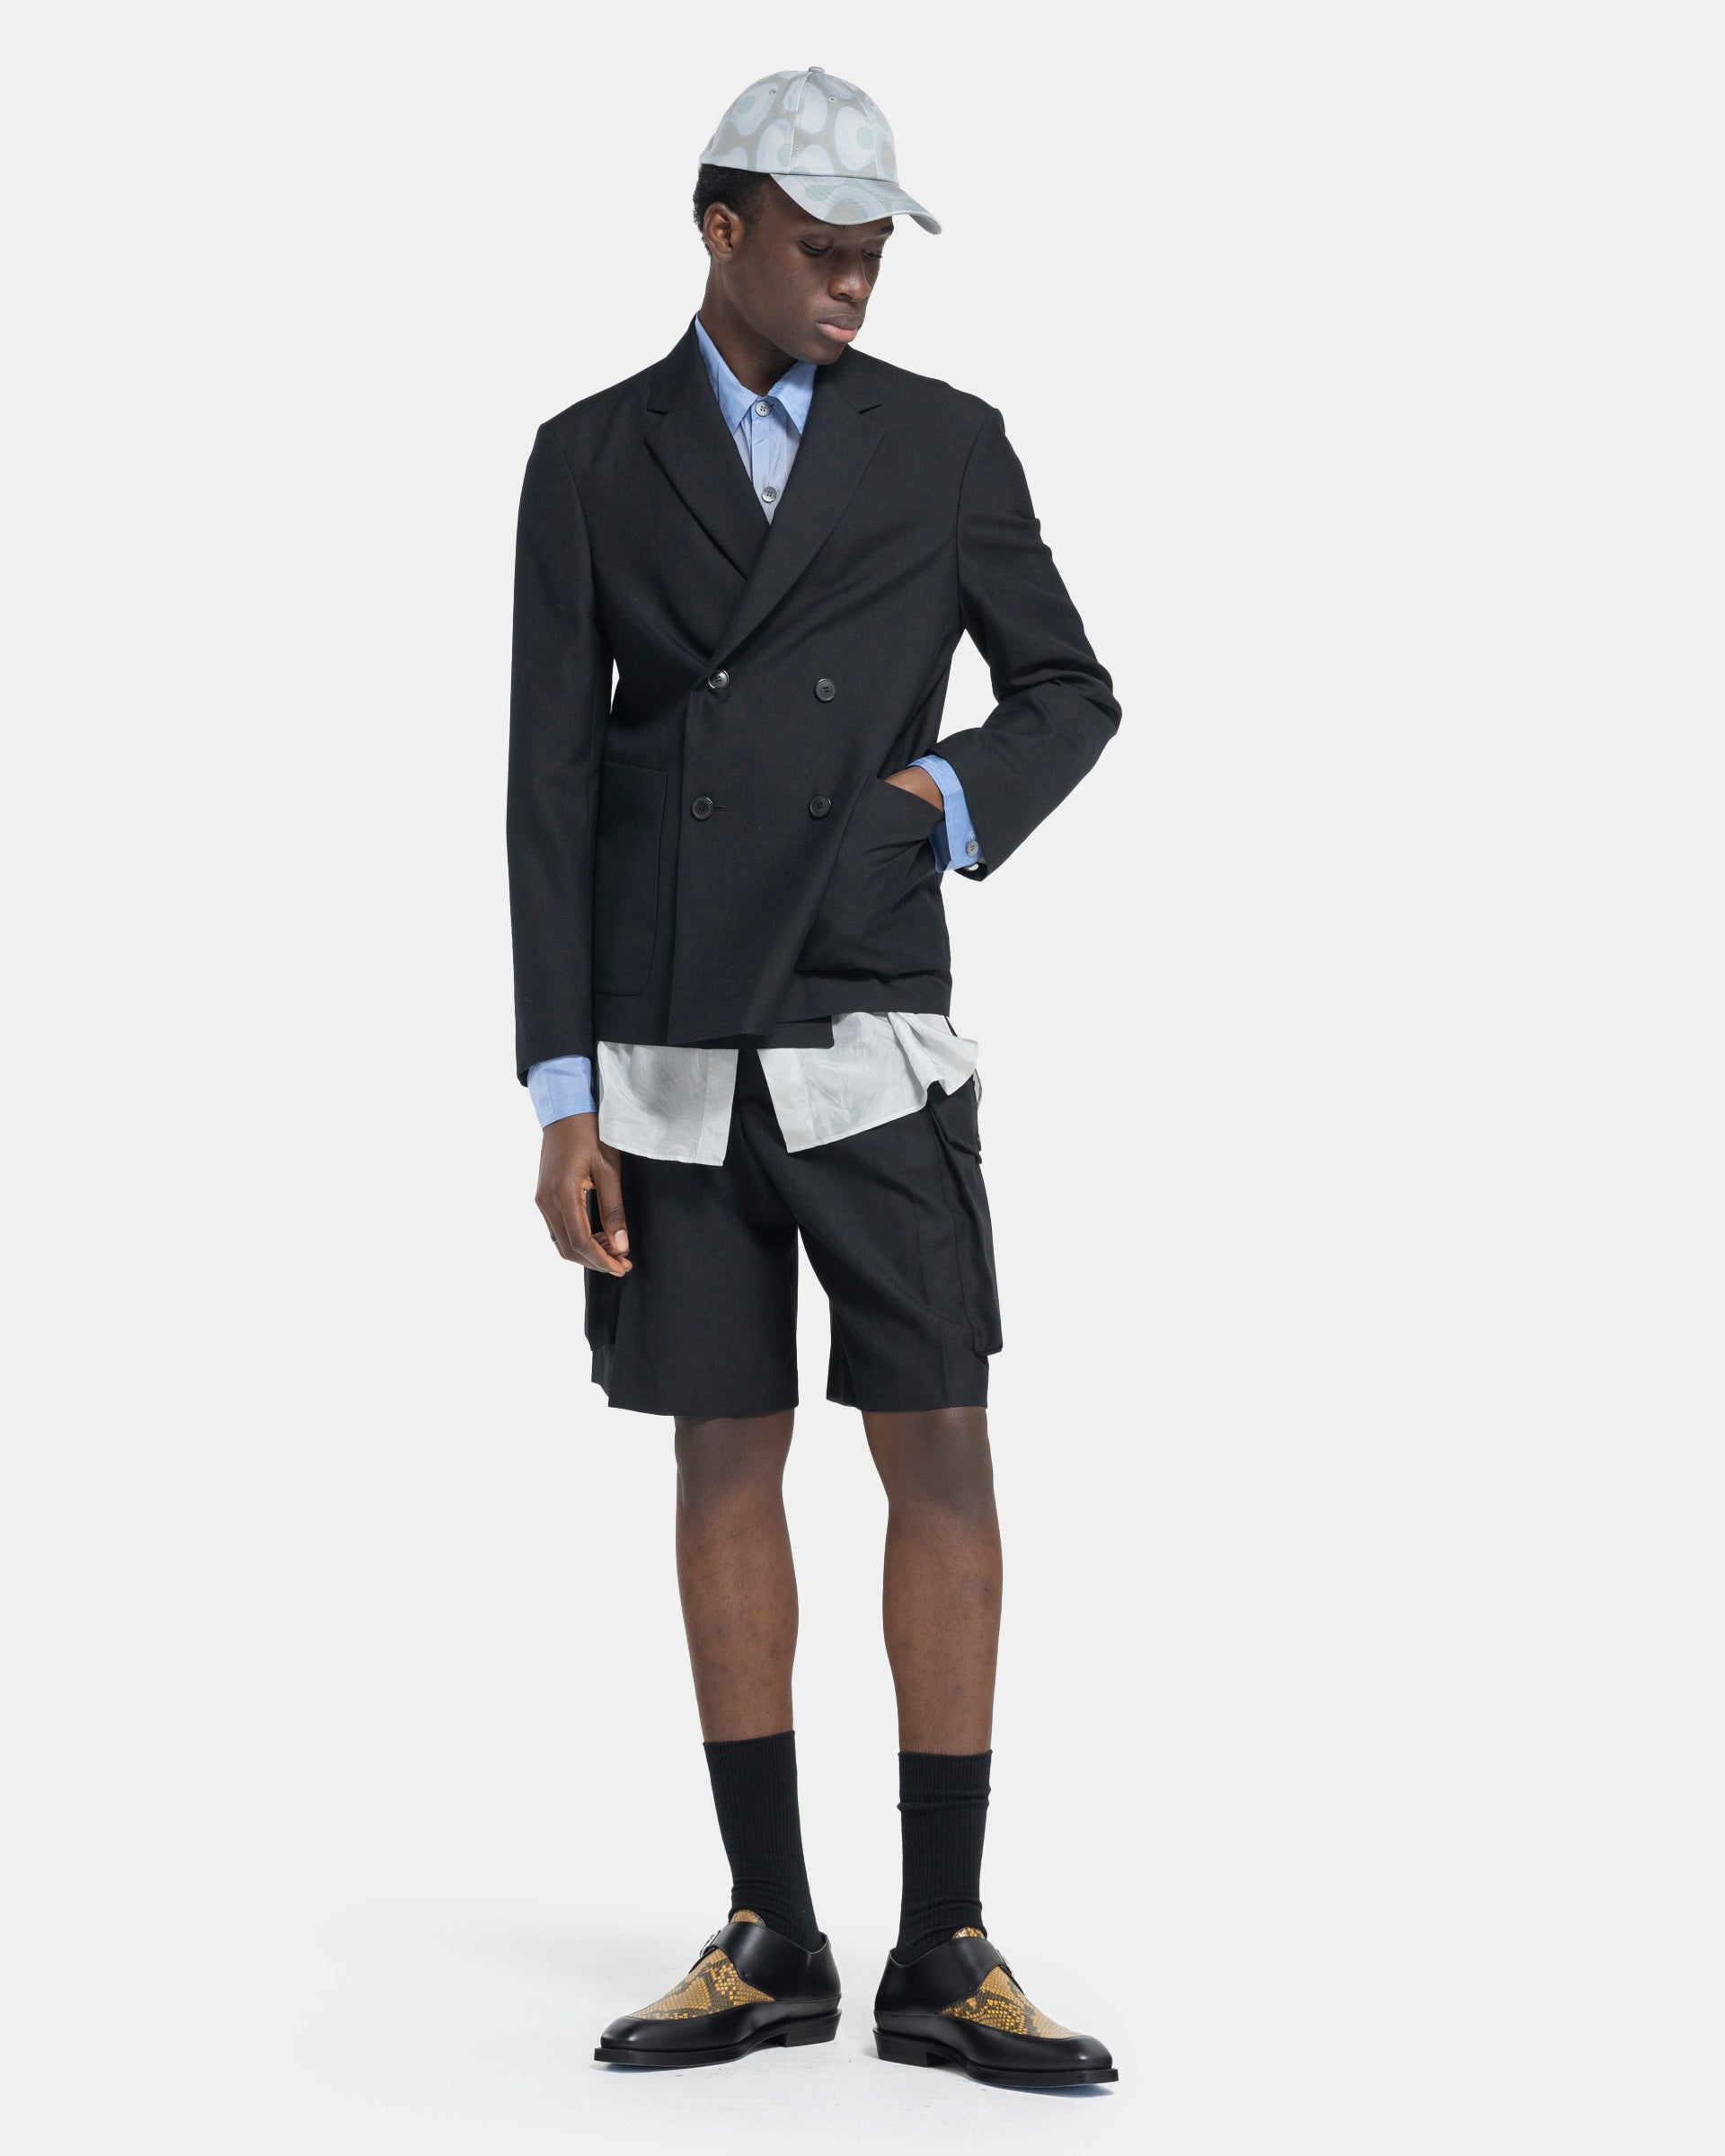 Model wearing Dries Van Noten Piers Bis Shorts in Black on white background